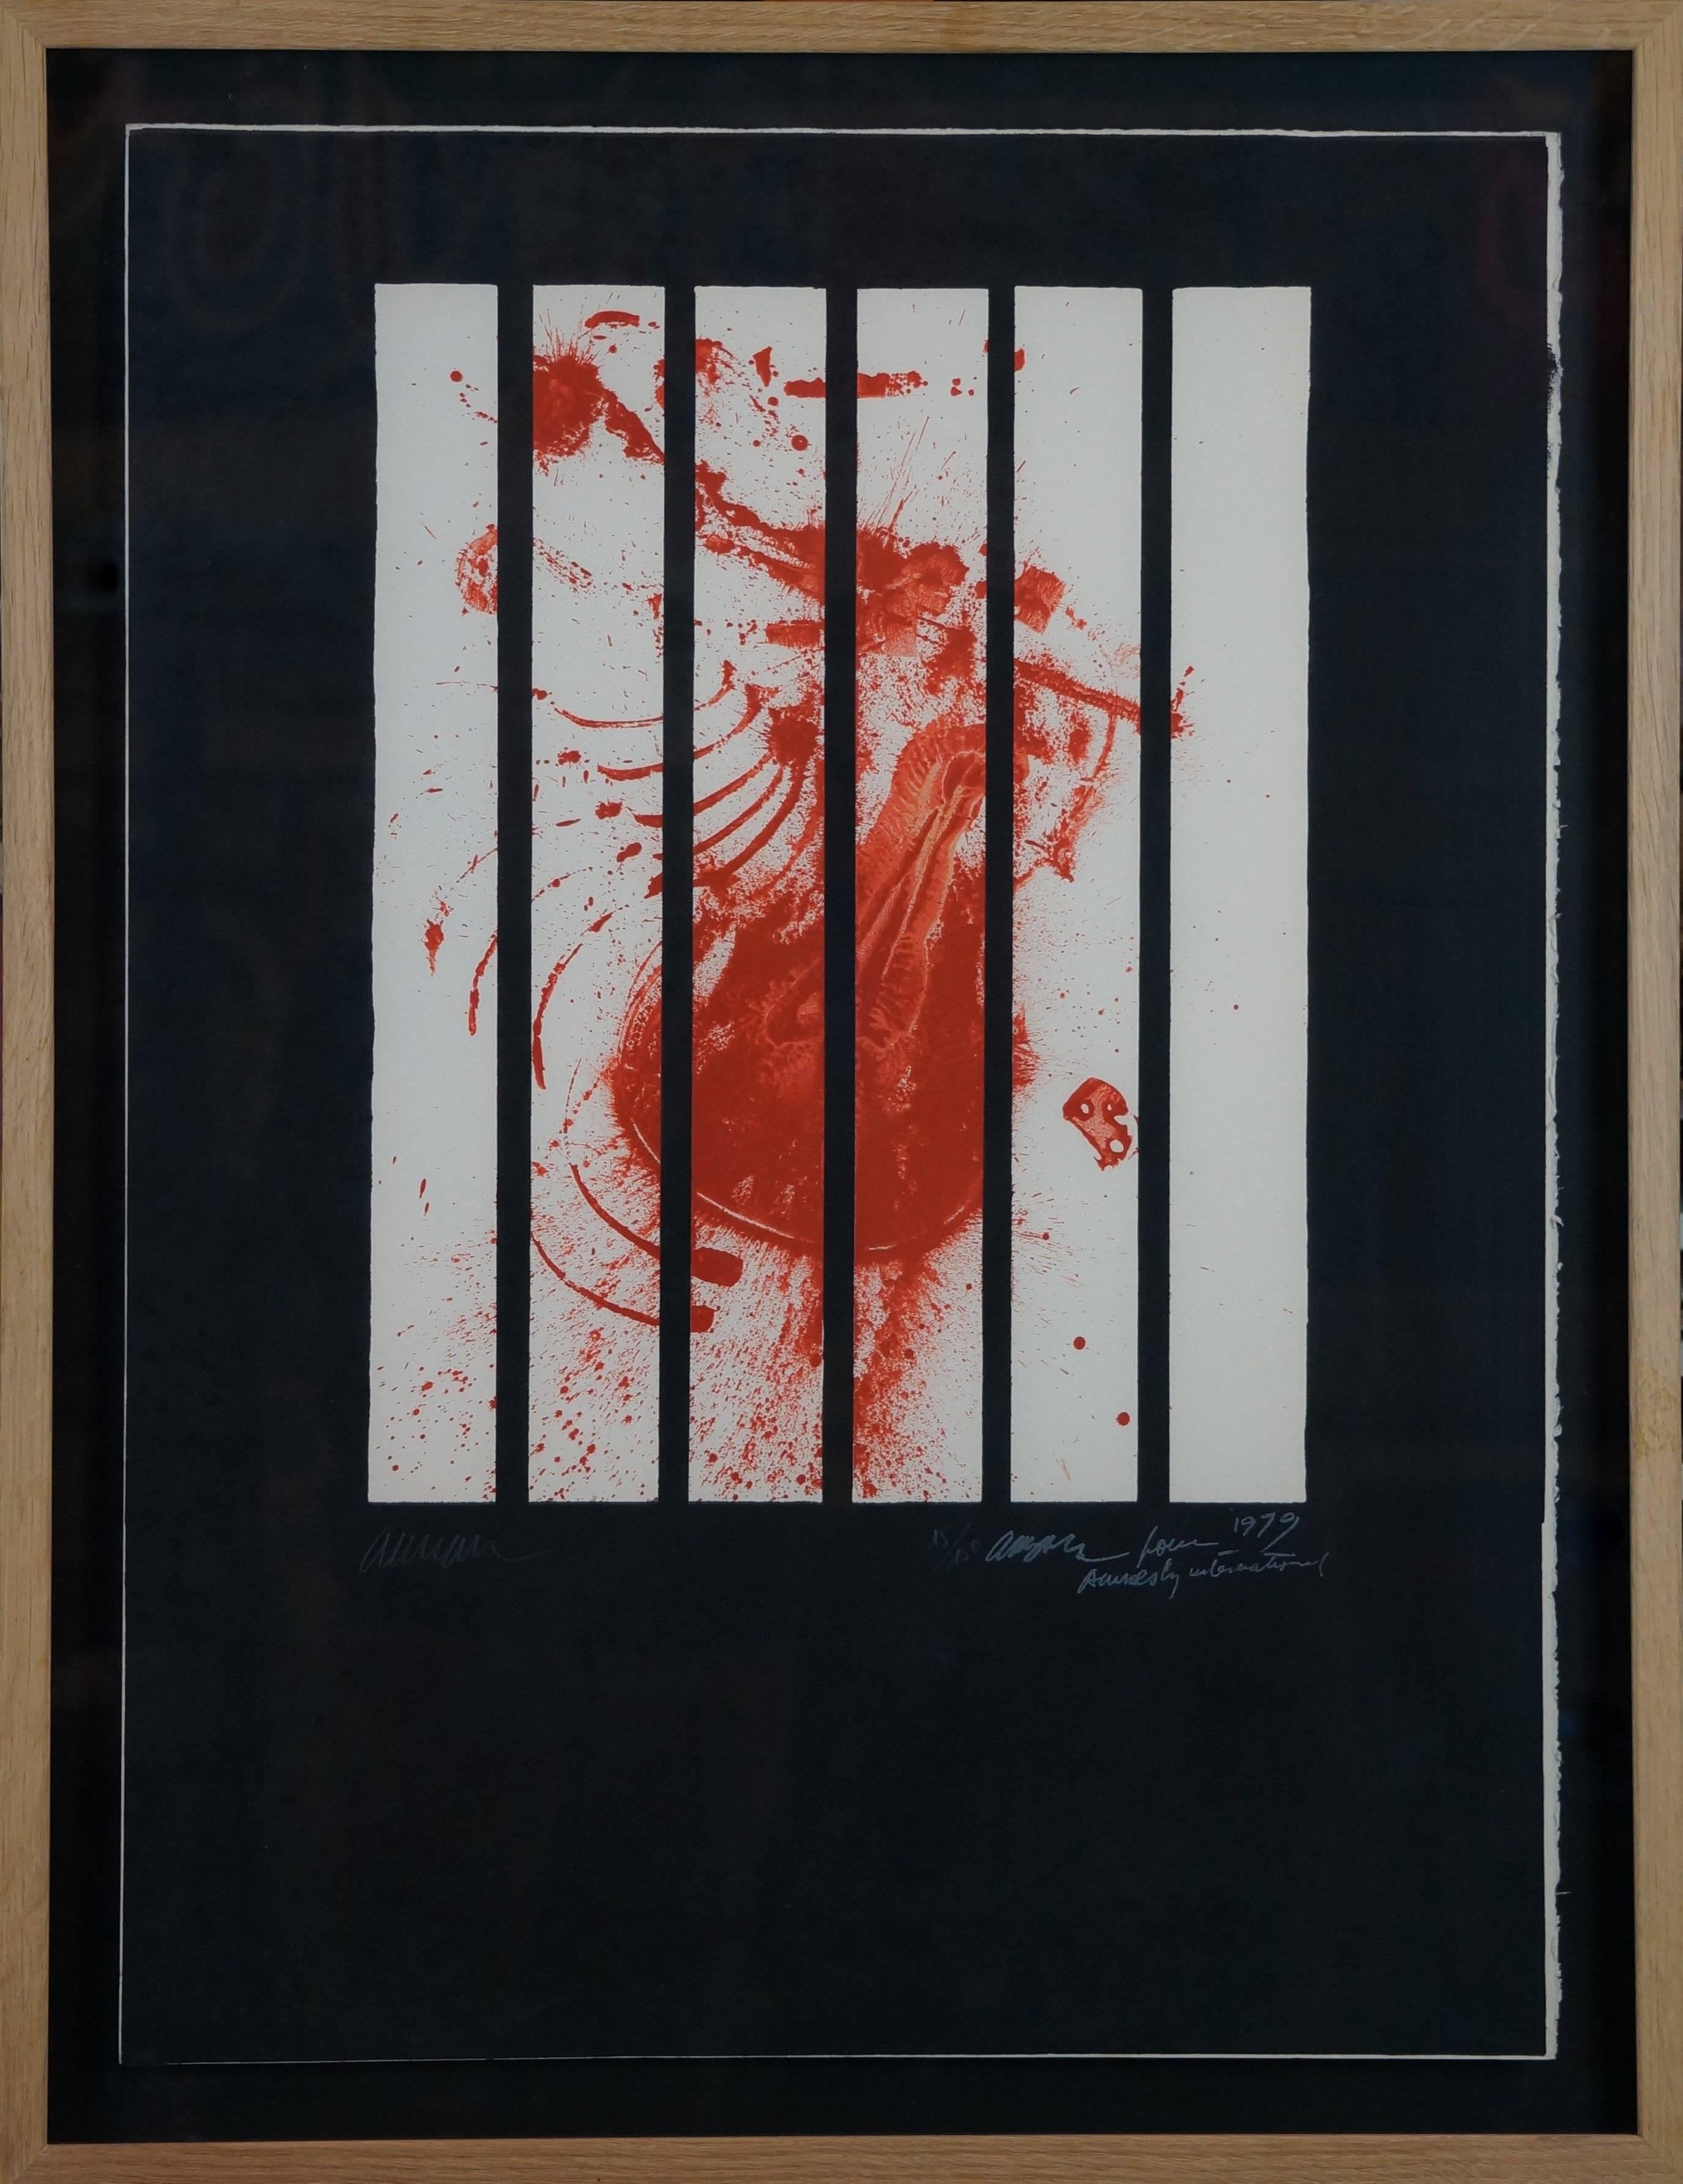 Abstract Print Arman - Composition abstraite AI, 1979, litographe, 86x66 cm, encadrée